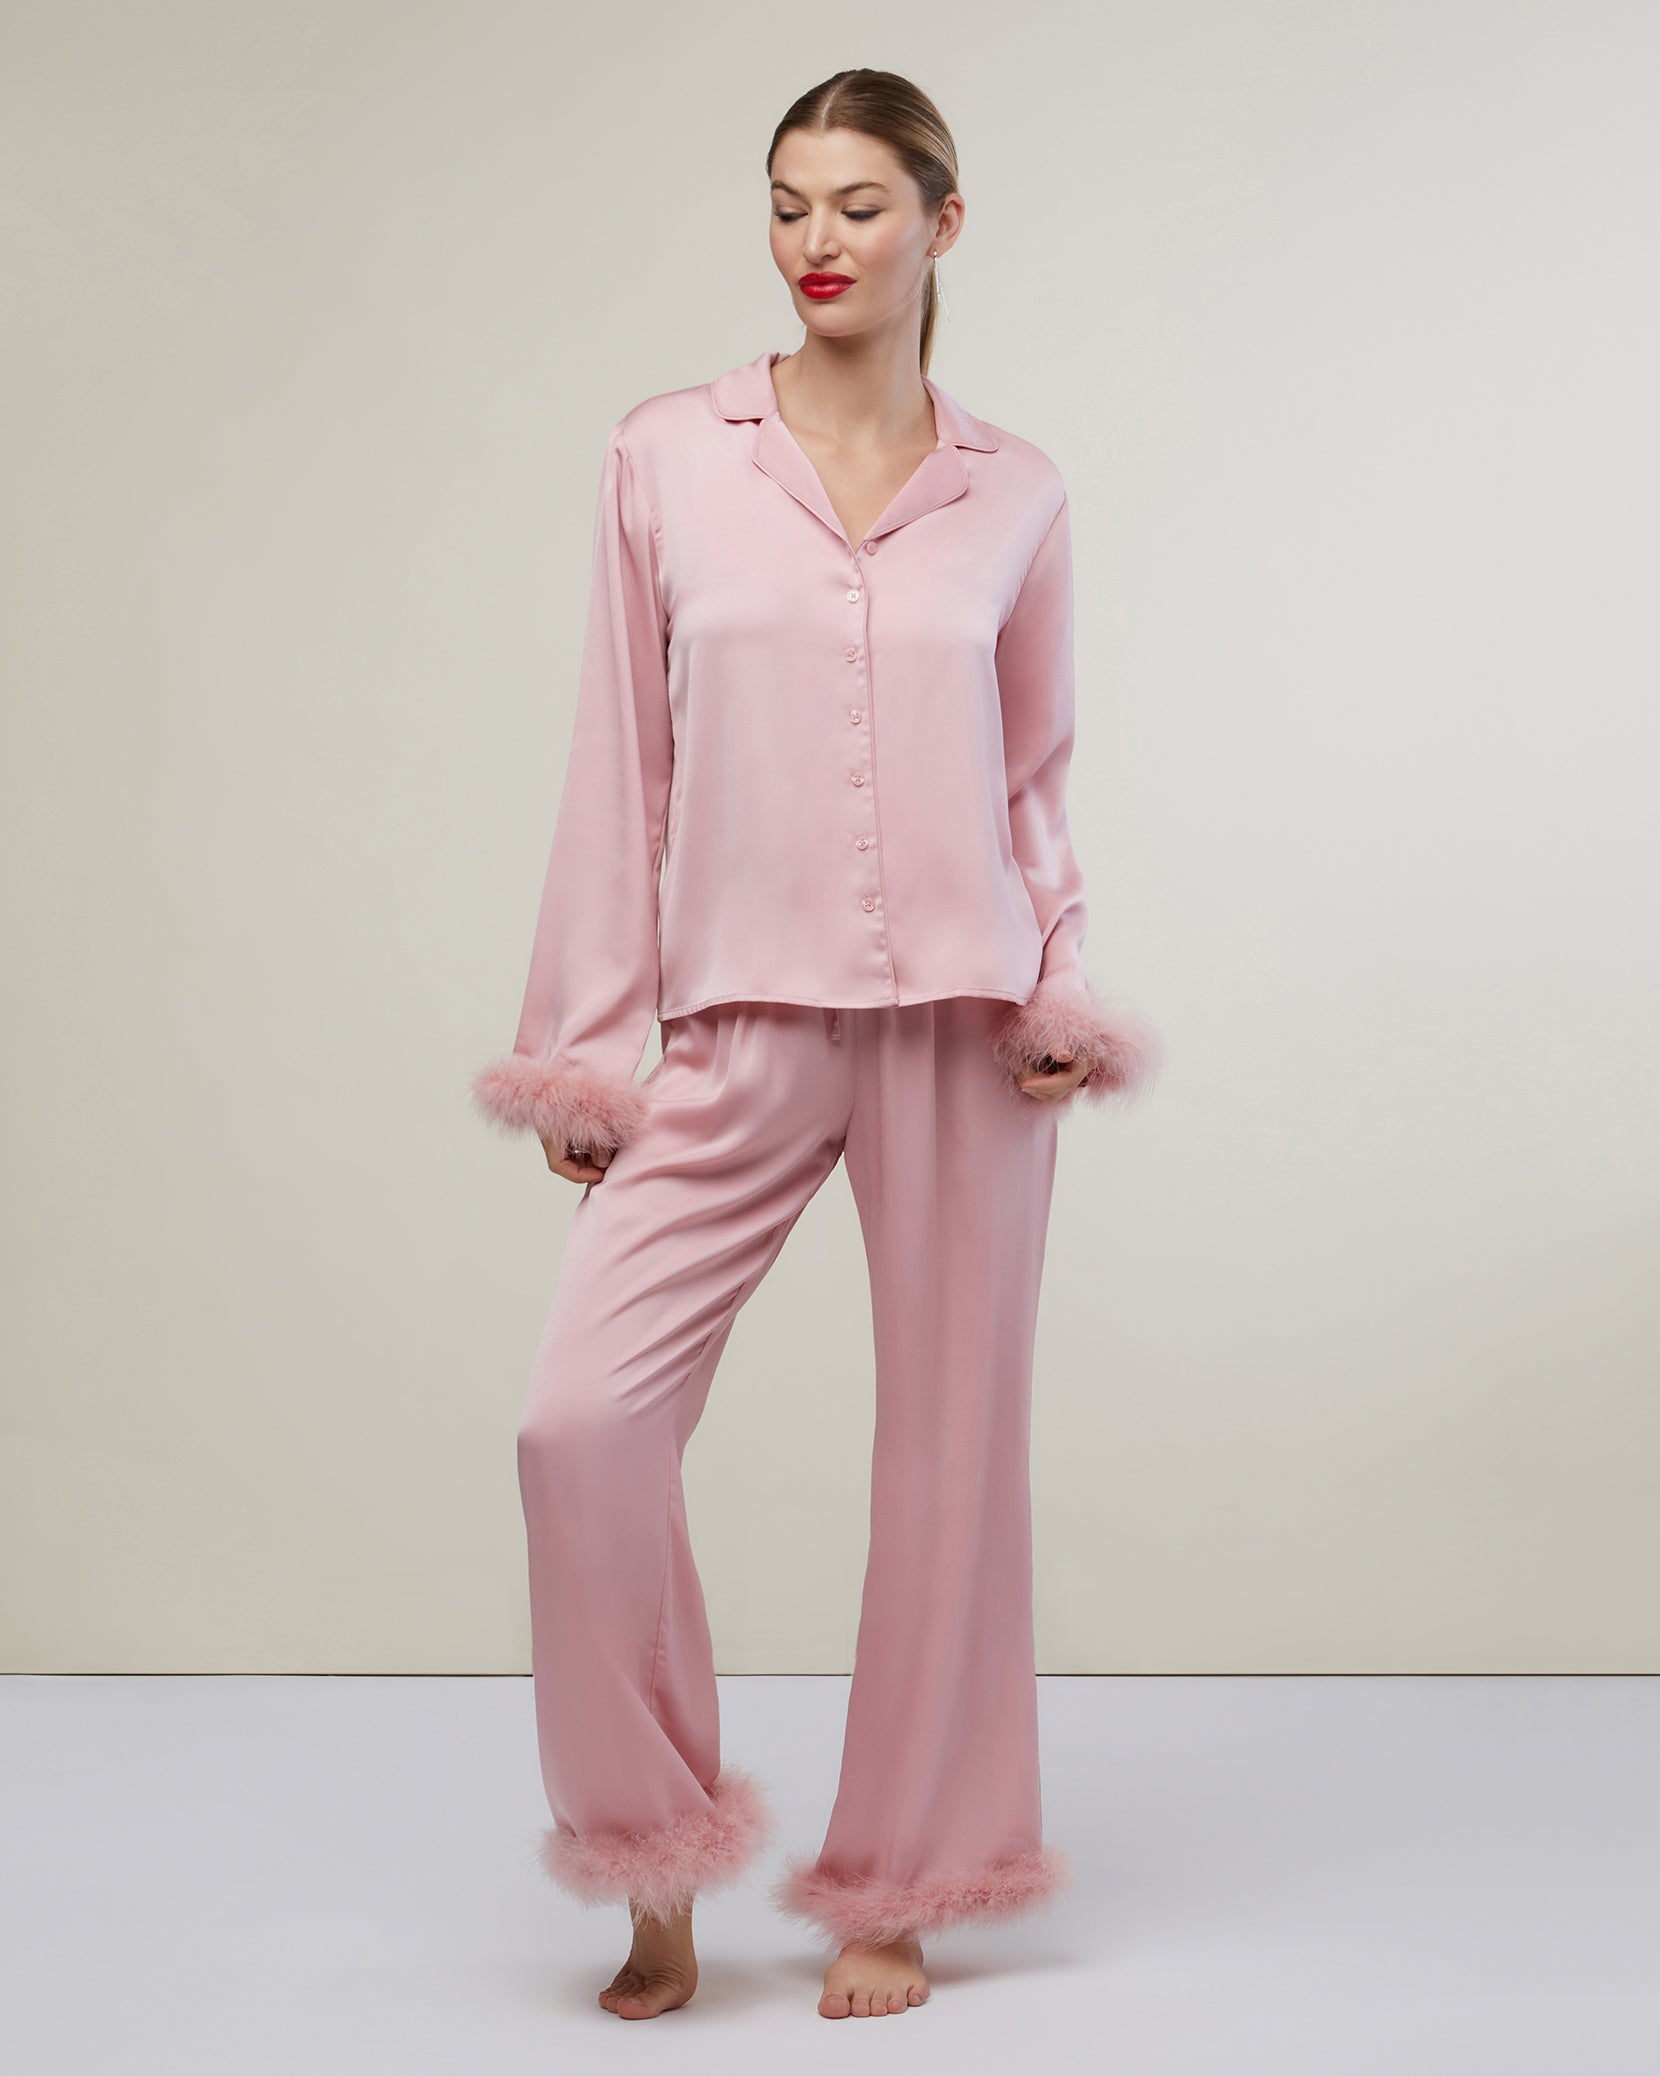 stars above, Intimates & Sleepwear, Stars Above Pink Satin Pajamas